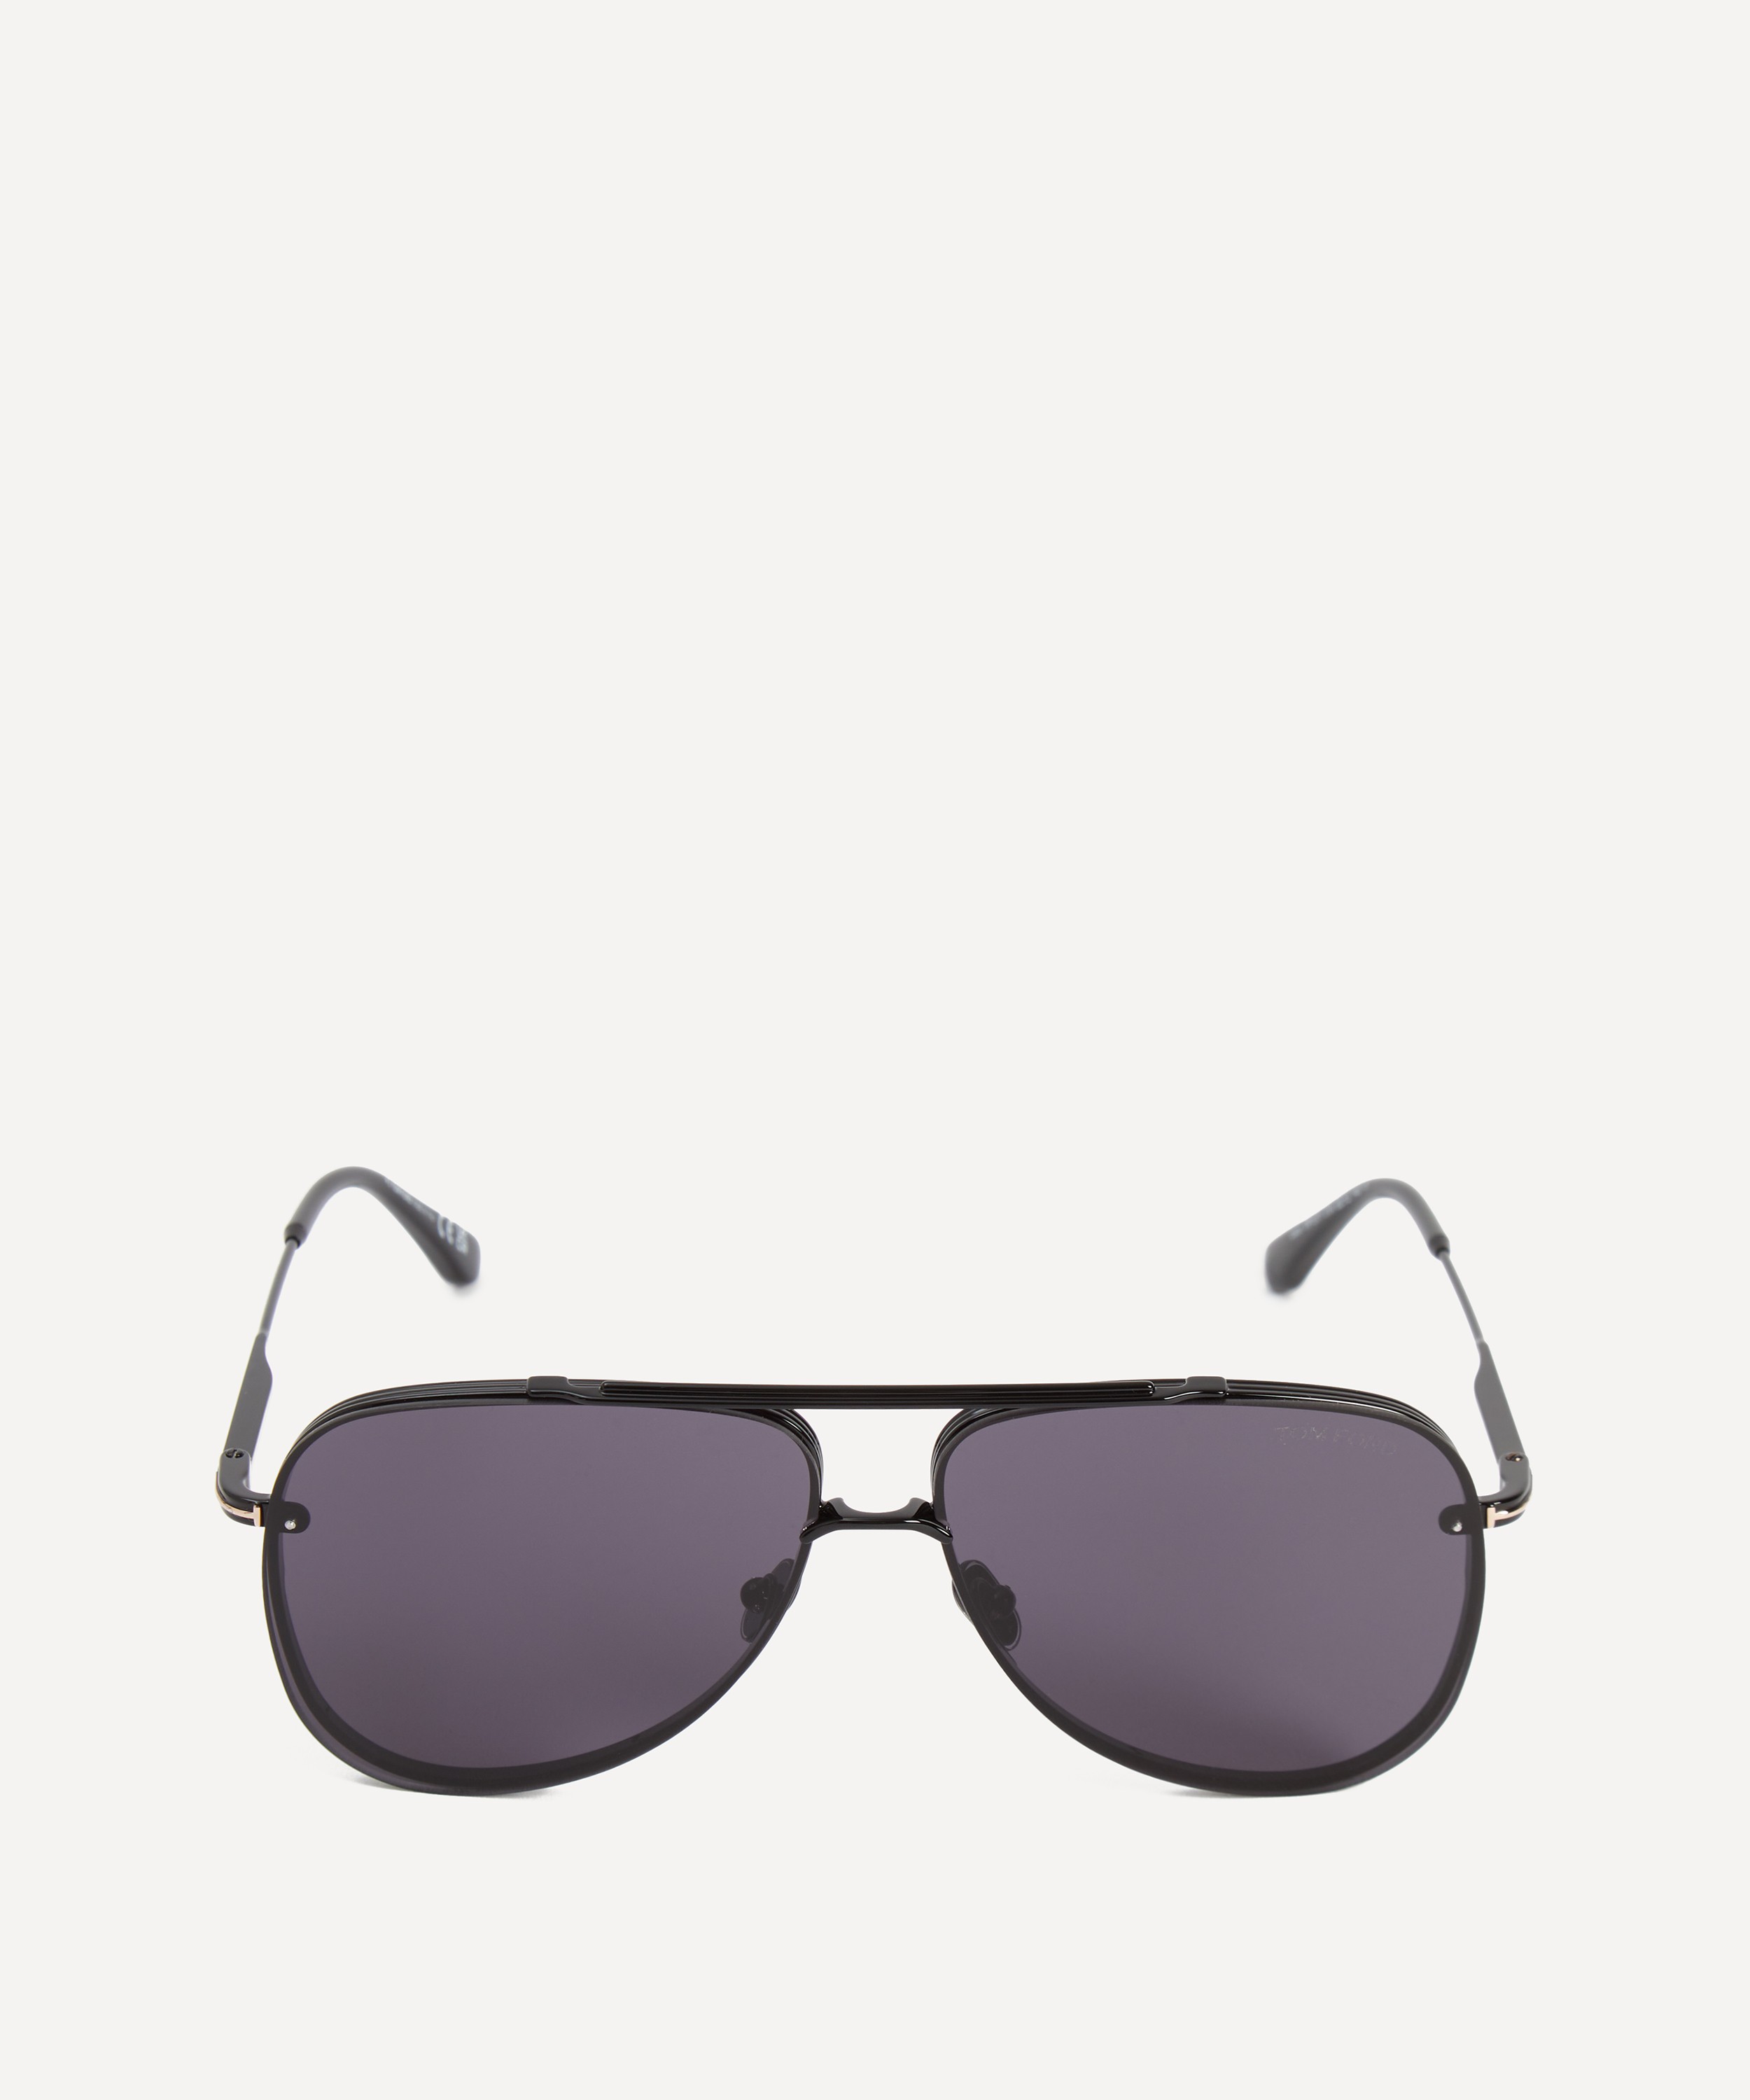 Tom Ford - Aviator Sunglasses image number 0